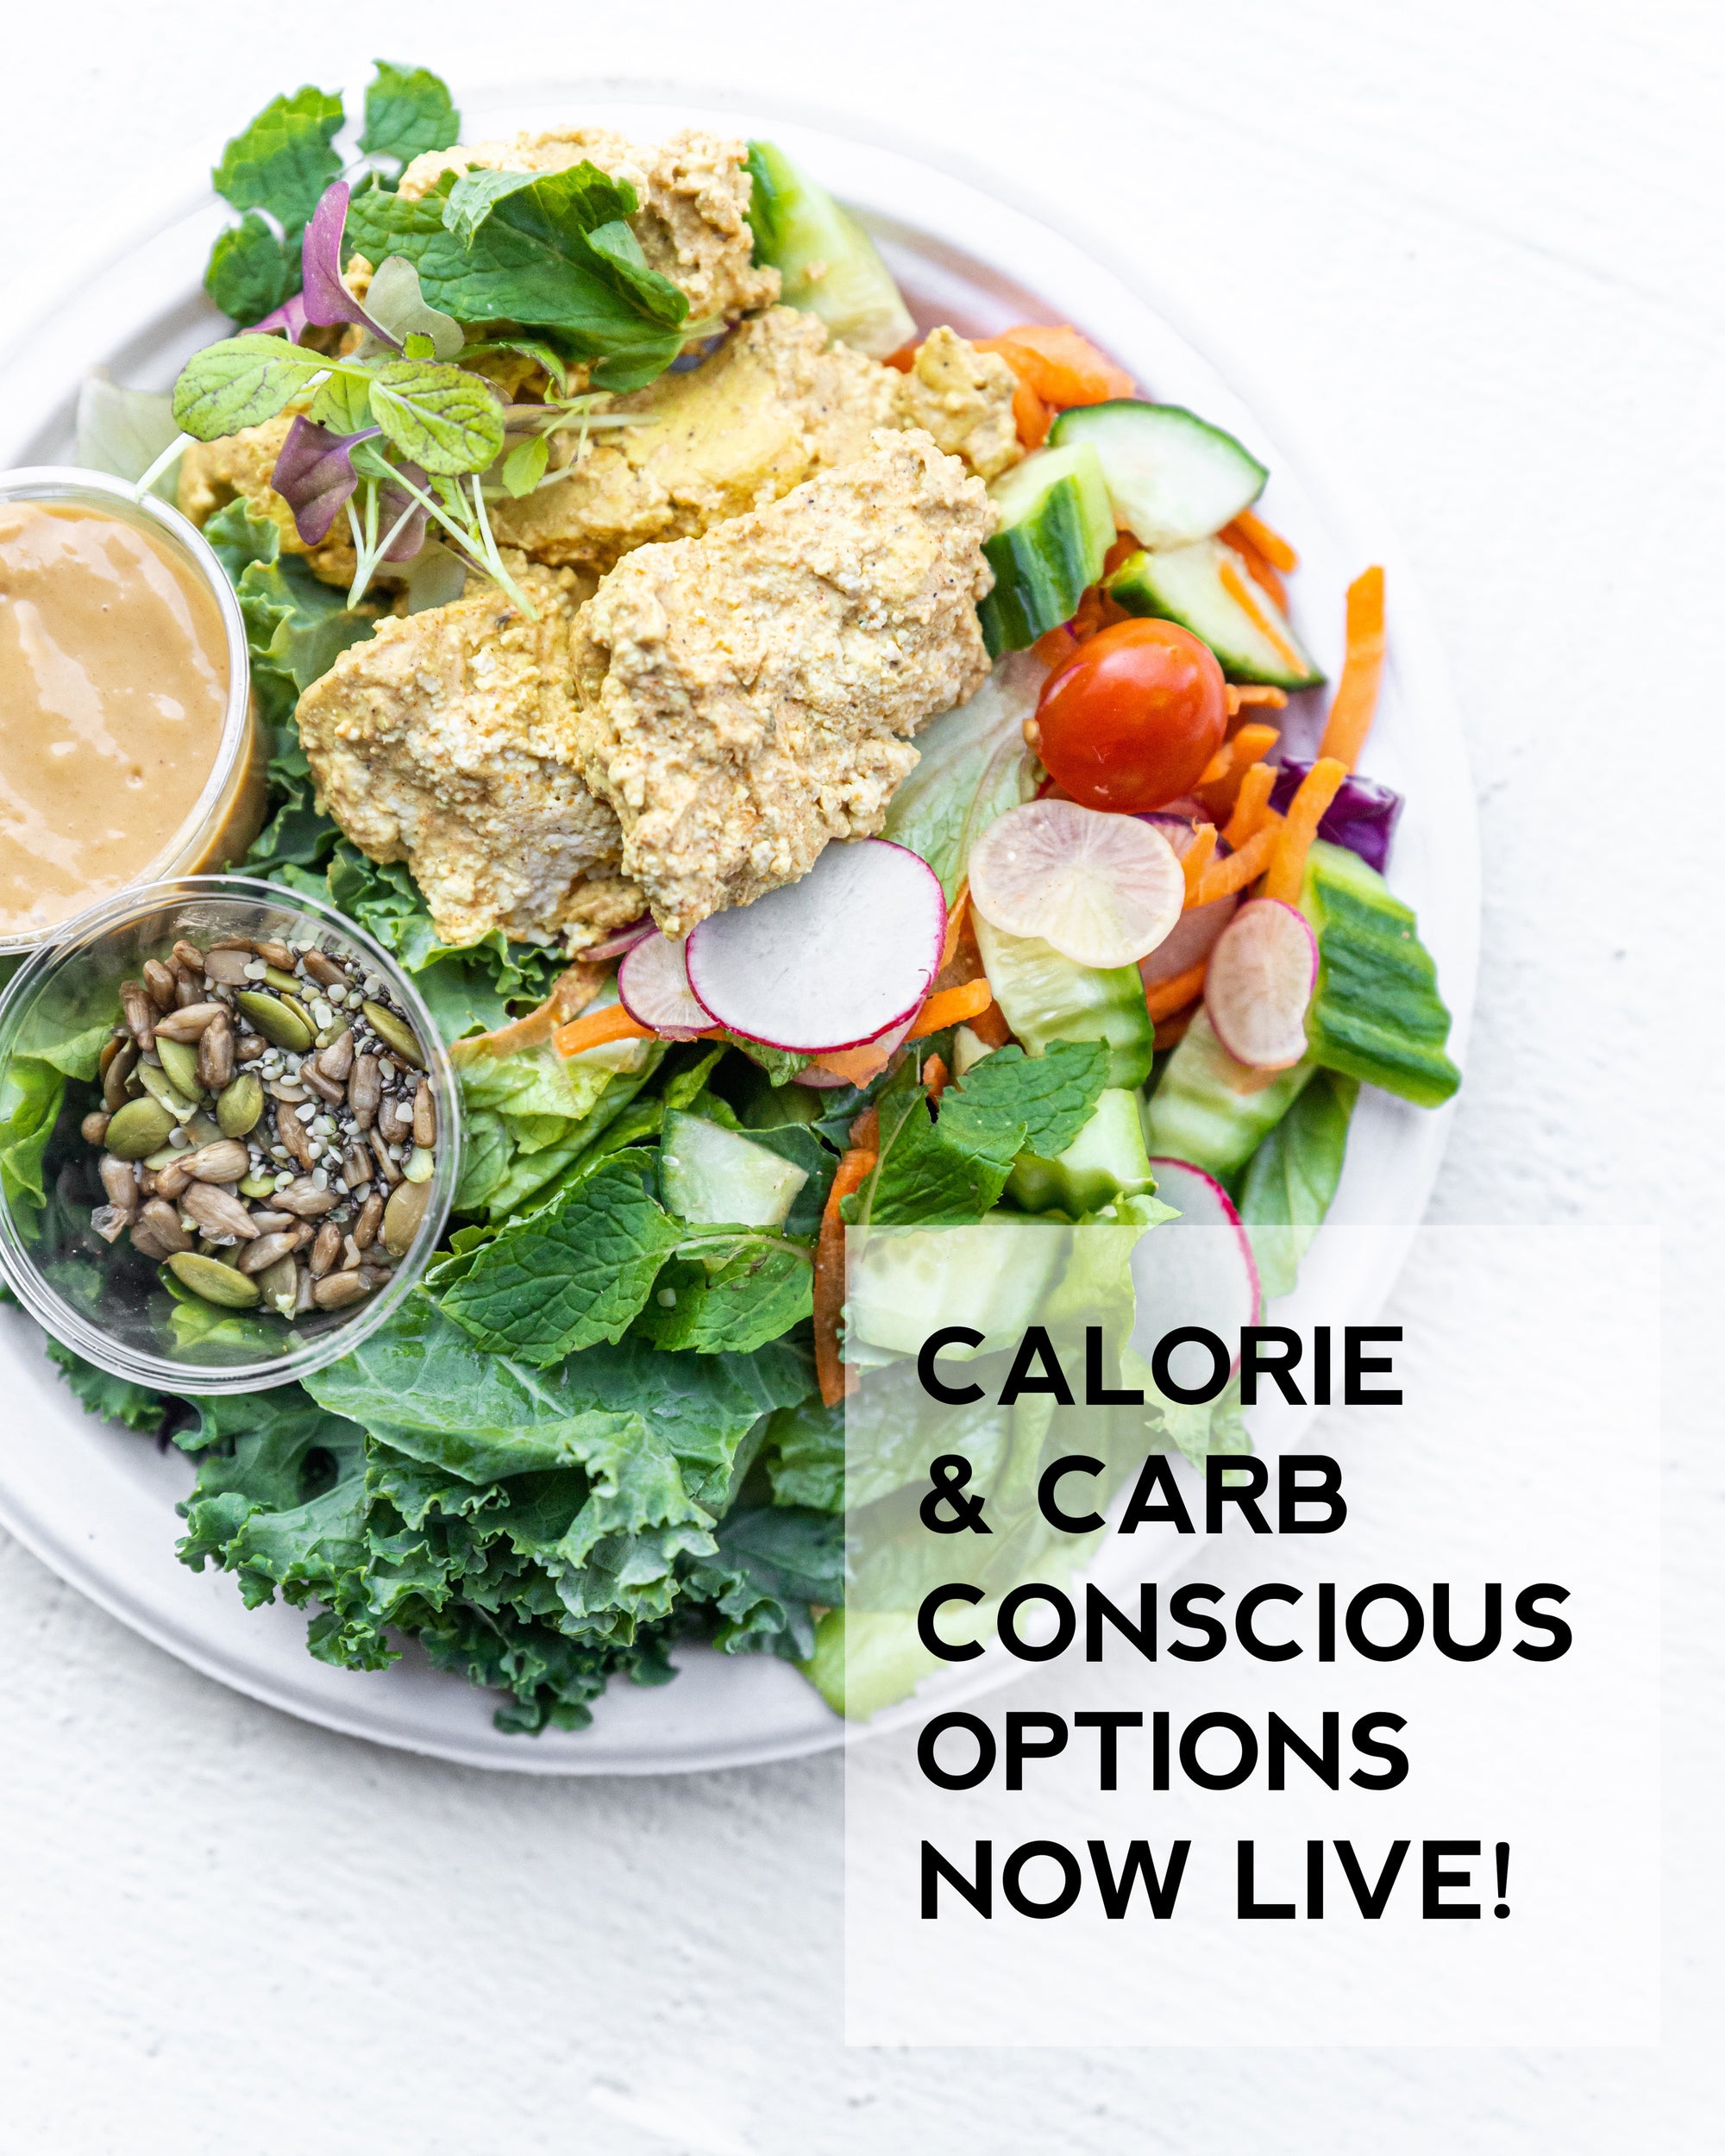 Calorie Conscious and Carb Conscious Options launch at Nourish!